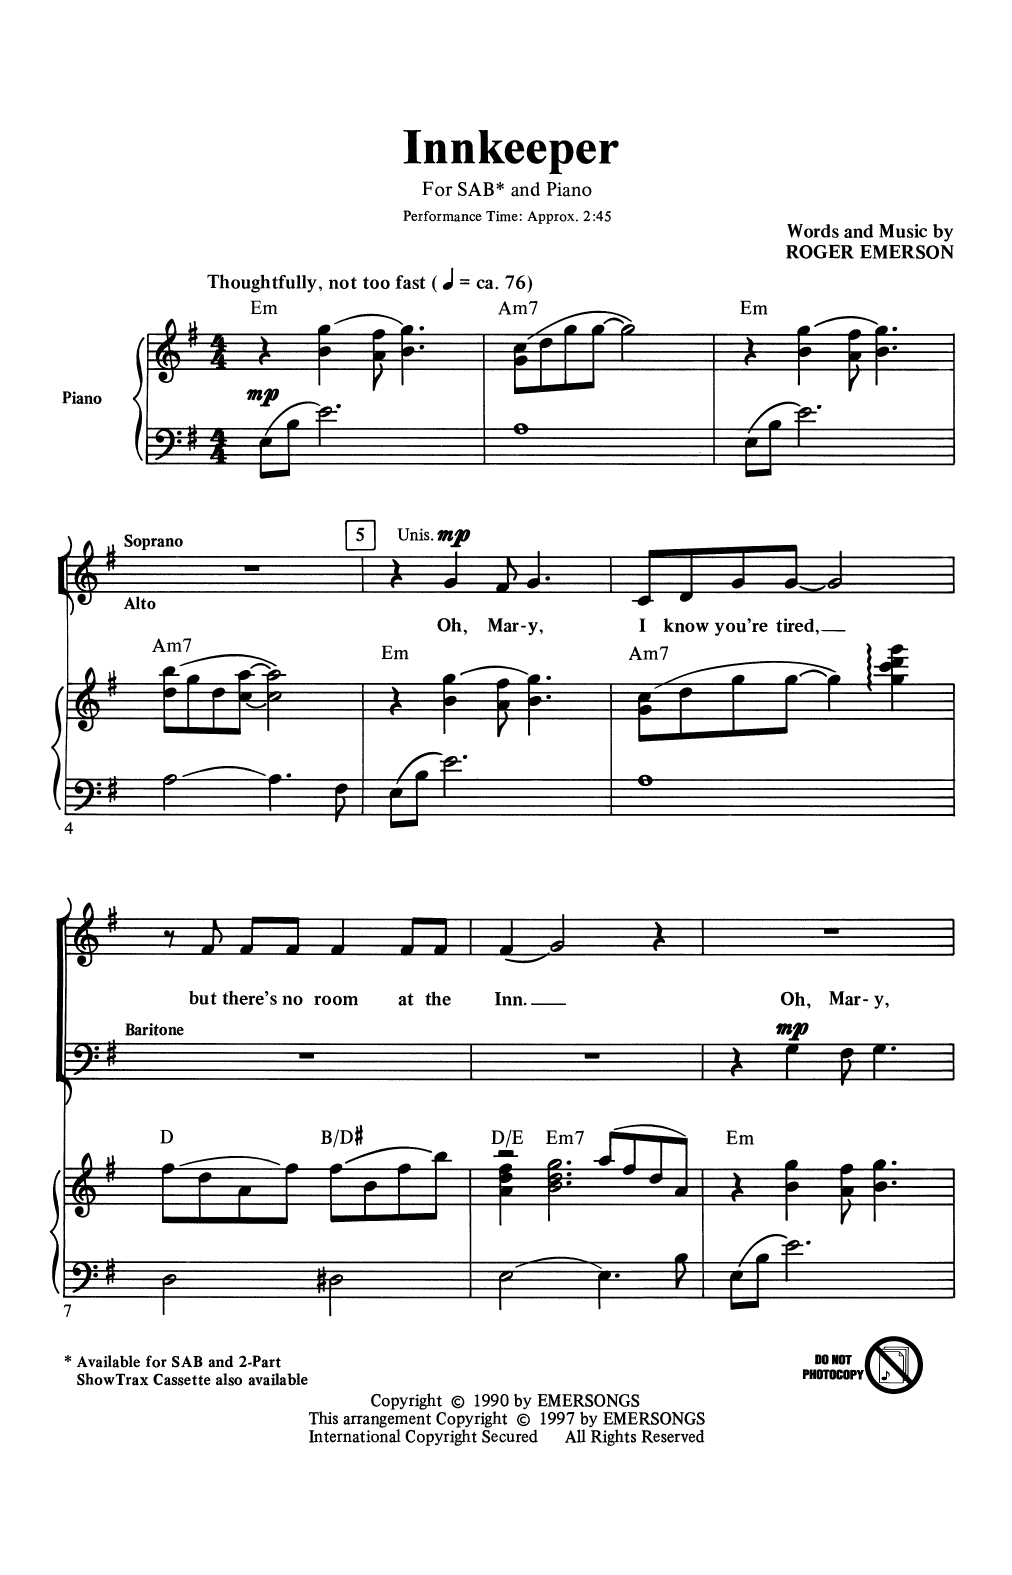 Roger Emerson Innkeeper Sheet Music Notes & Chords for SAB Choir - Download or Print PDF